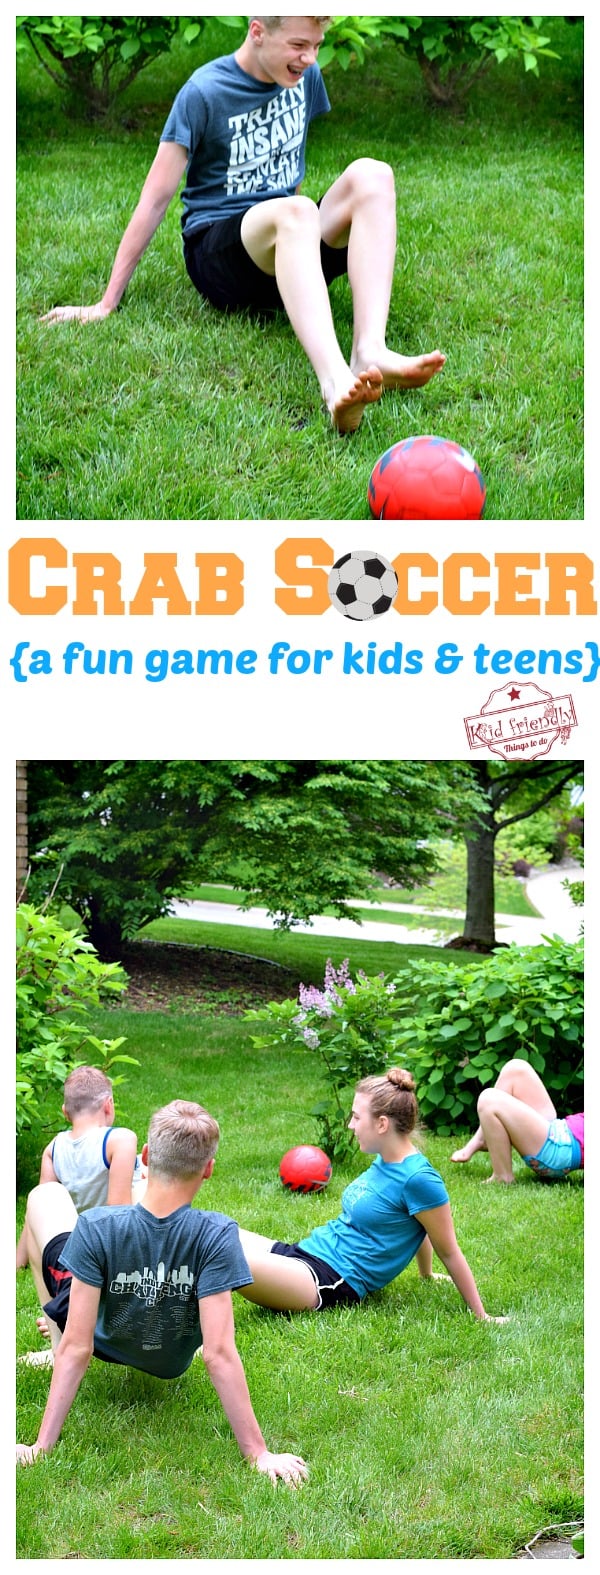 crab soccer game